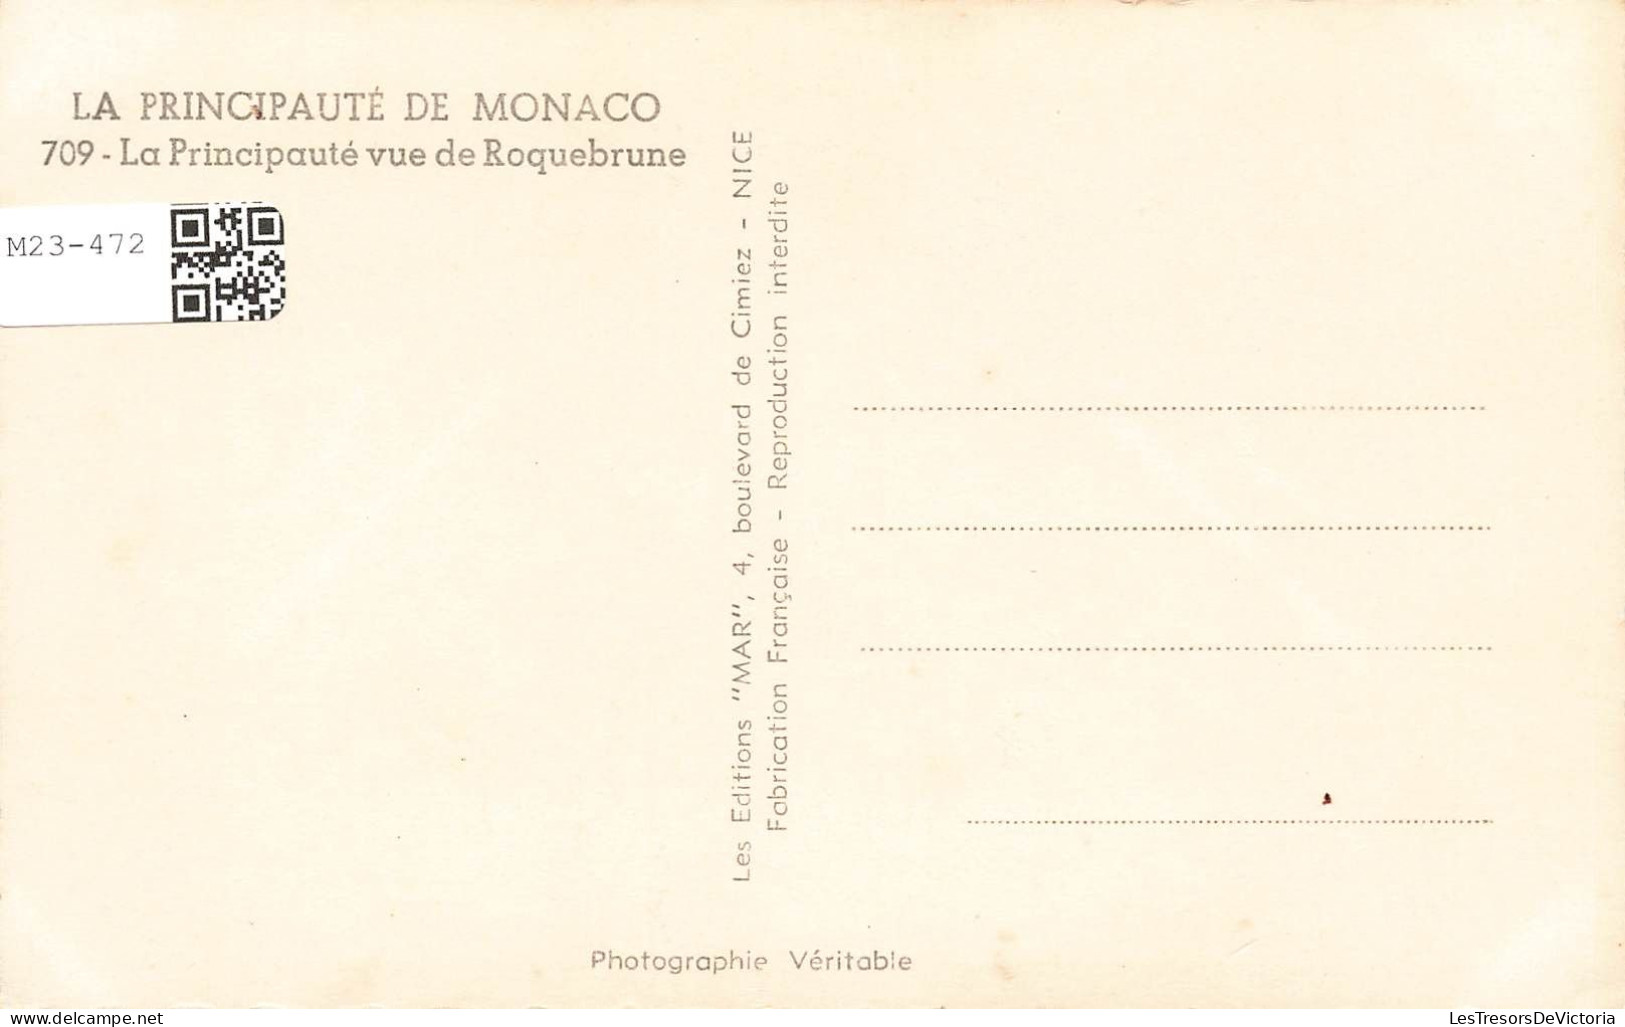 MONACO - La Côte D'Azur - La Principauté De Monaco - Principauté Vue De Roquebrune - Carte Postale - Panoramic Views